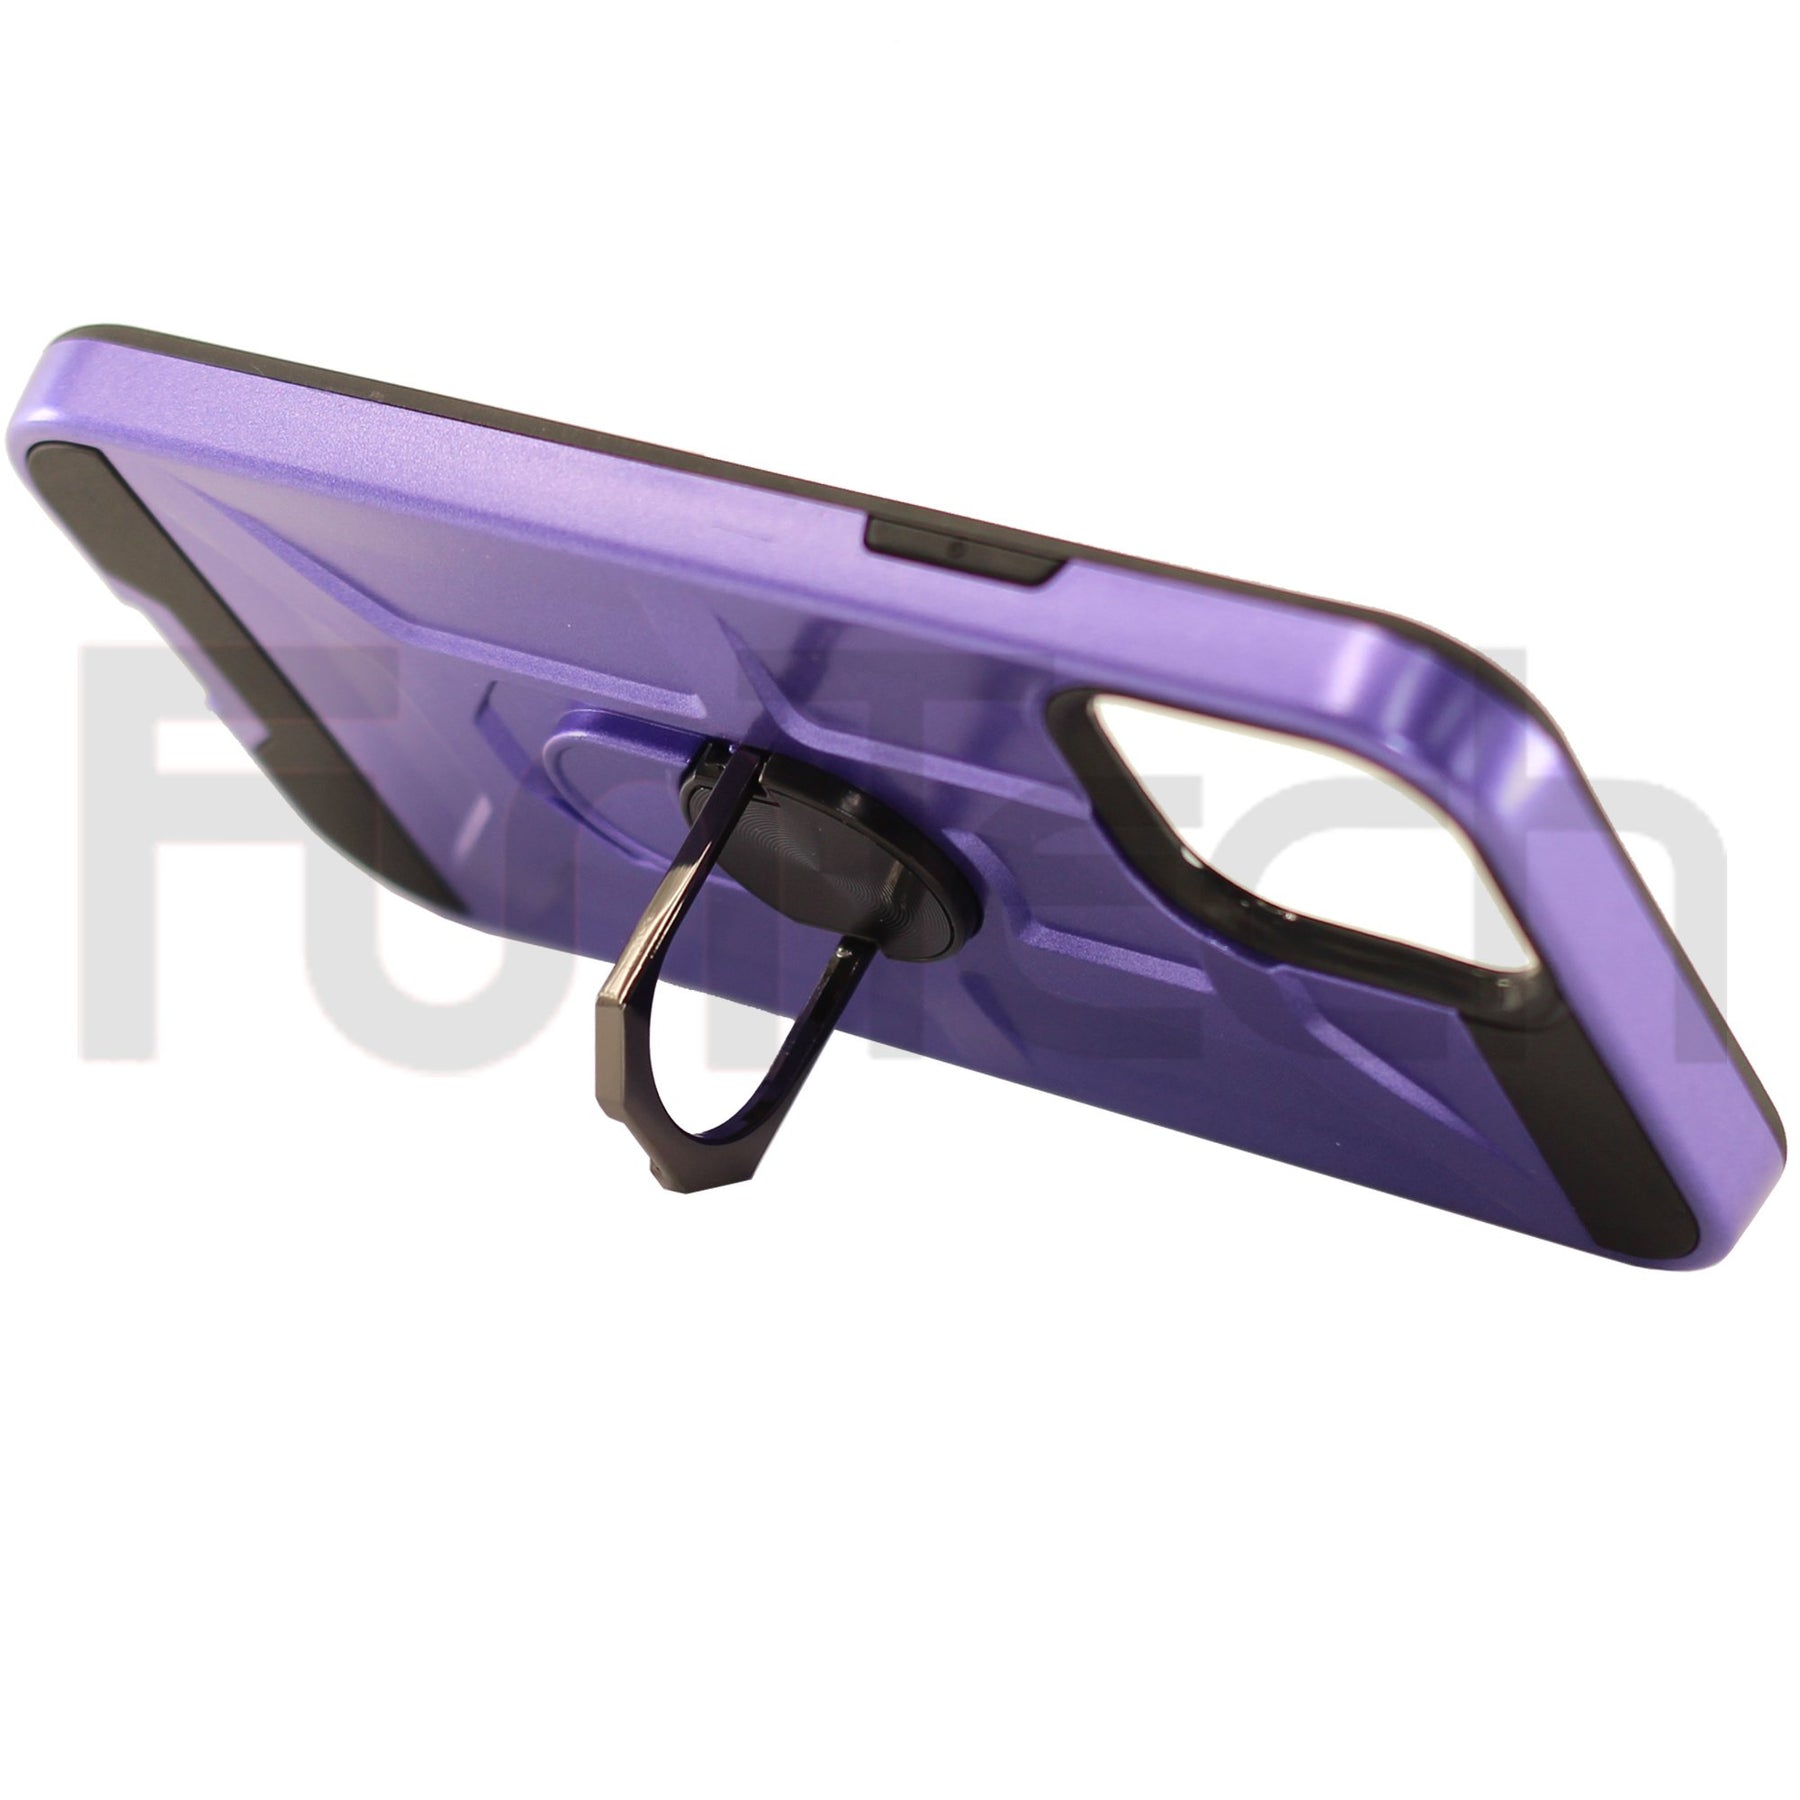 Apple iPhone 12/12 Pro Ring Armor Case Color Purple